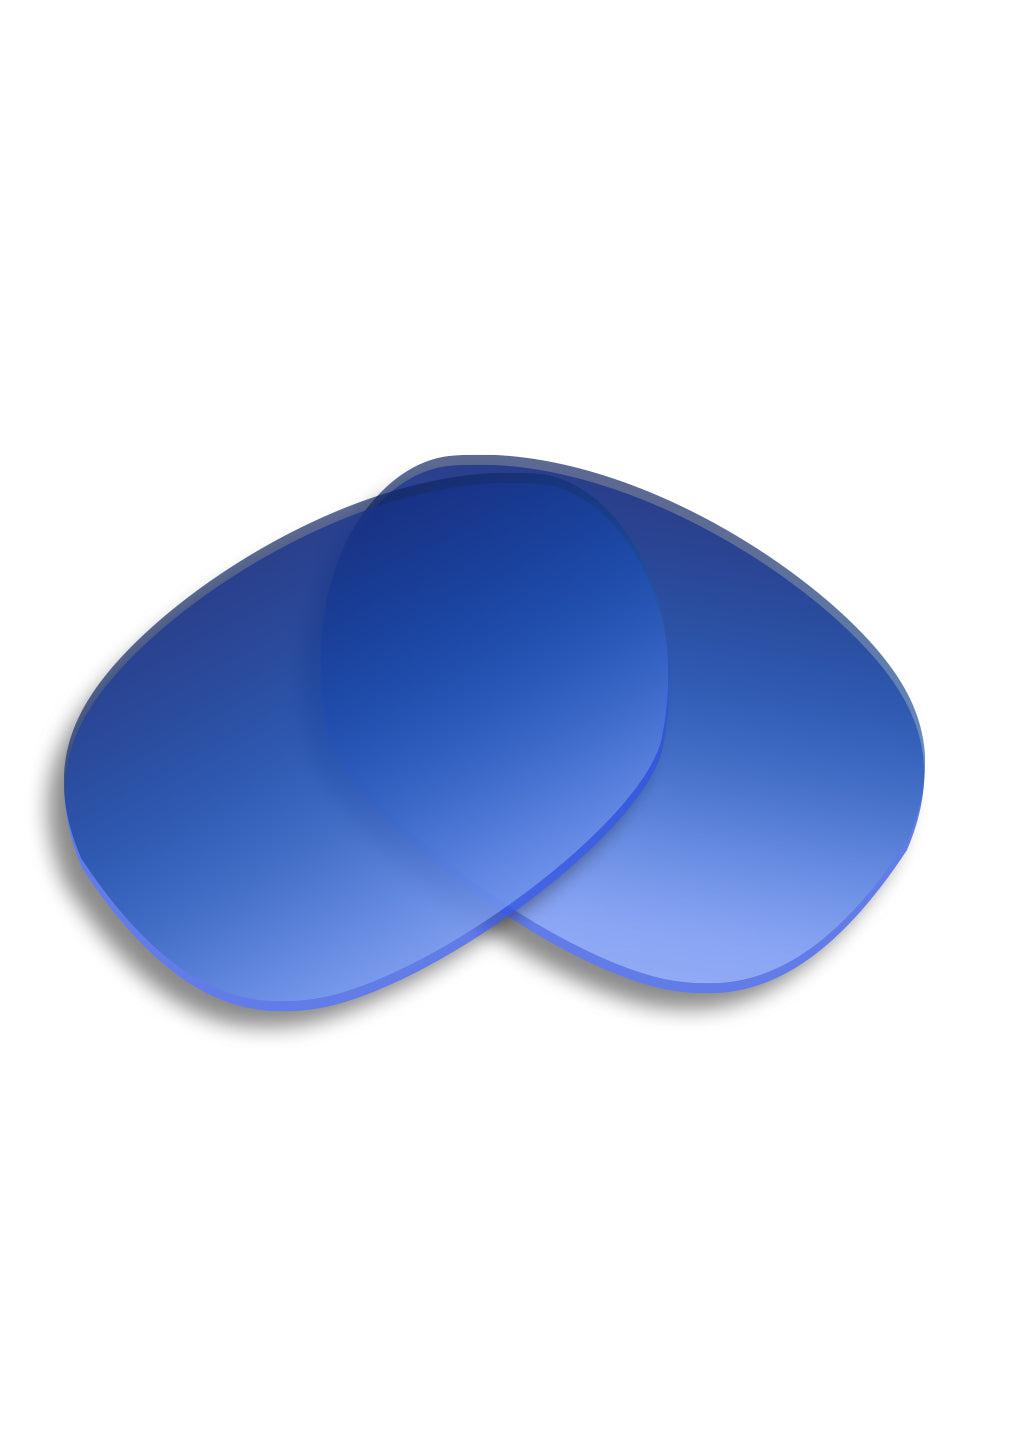 Extra lenses for Titan V2 sunglasses. This is gradient blue.